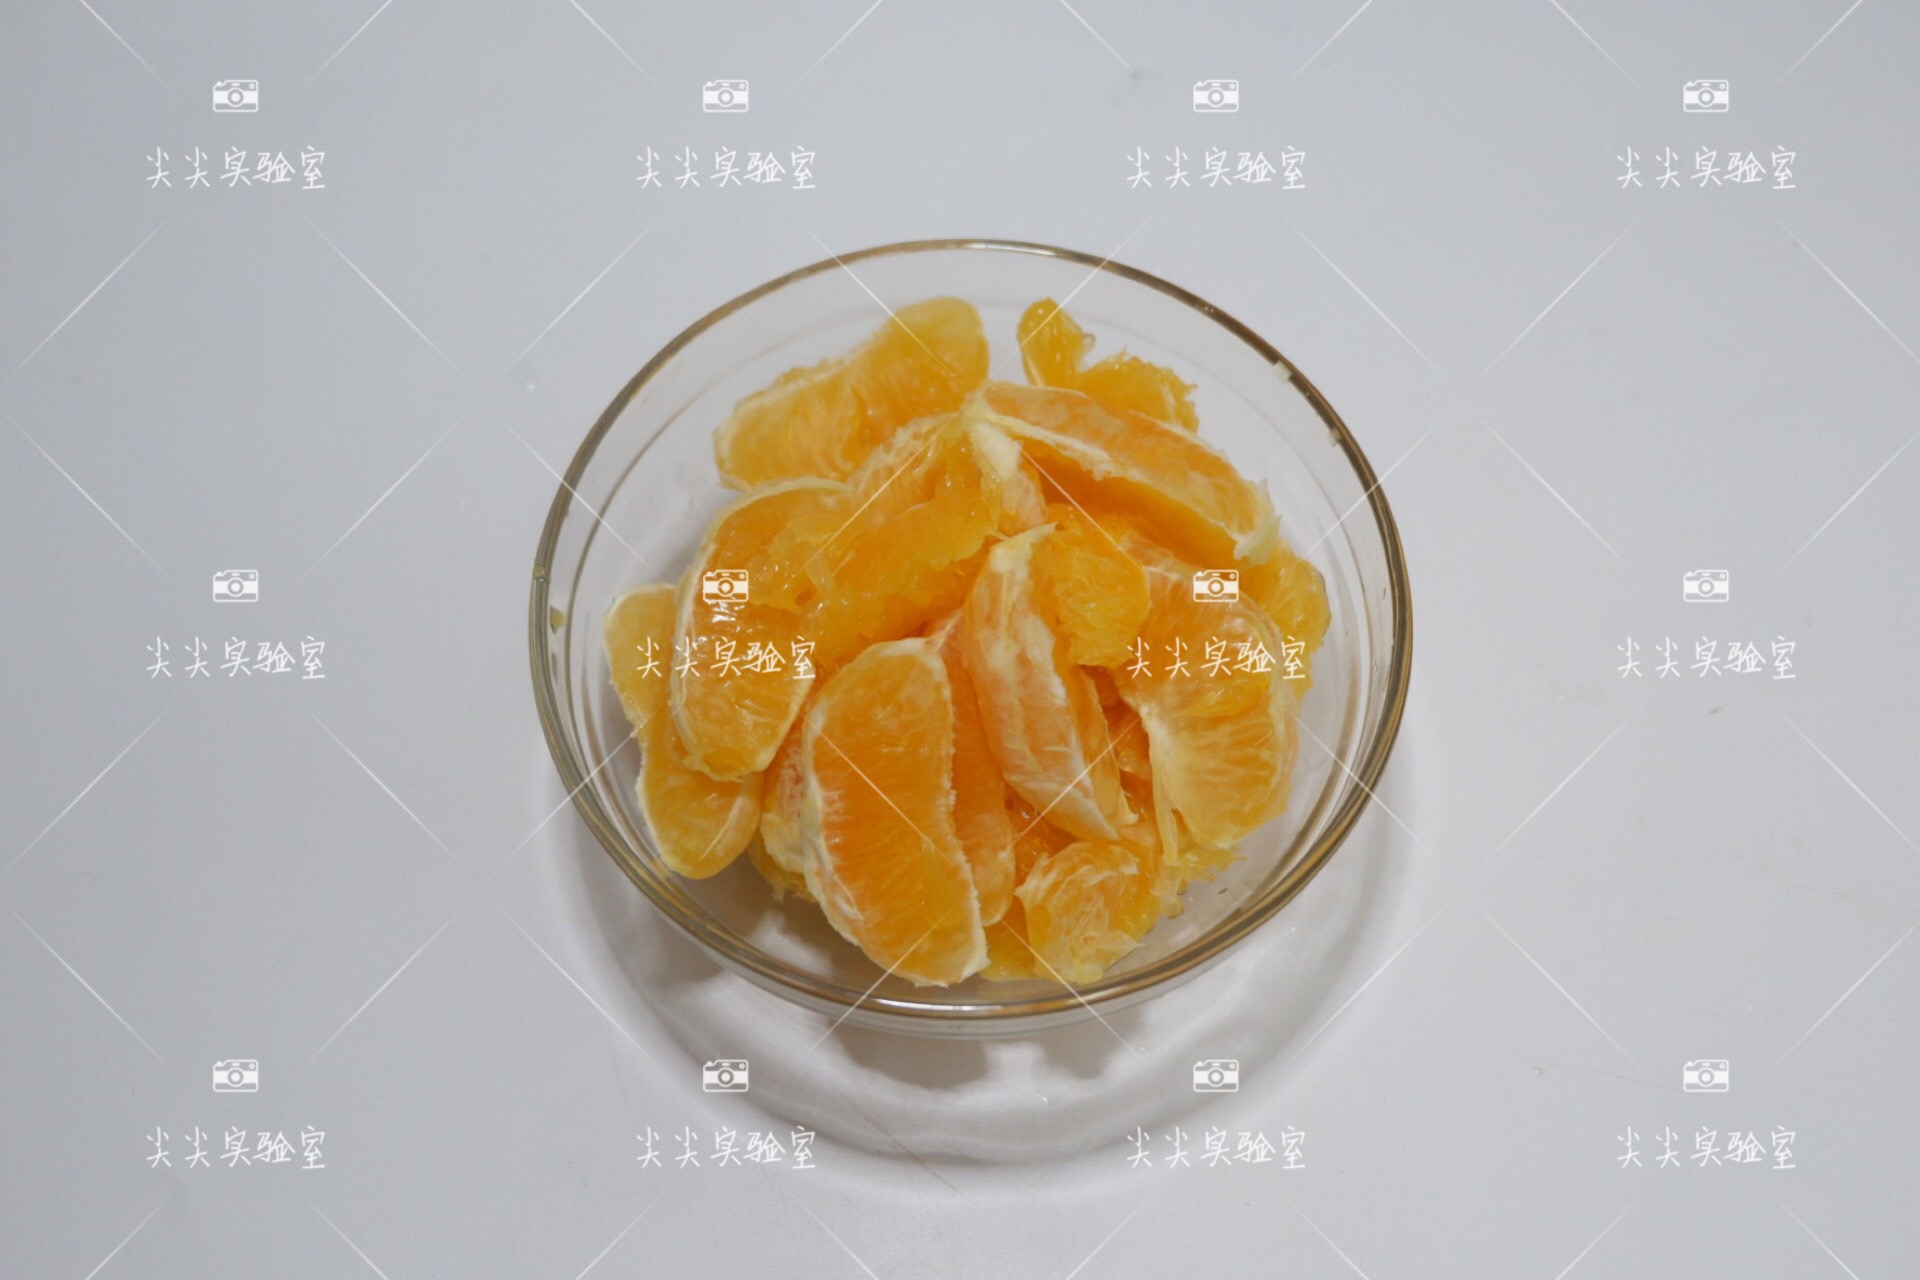 ZapPaLang: 炖橙子 Steamed orange